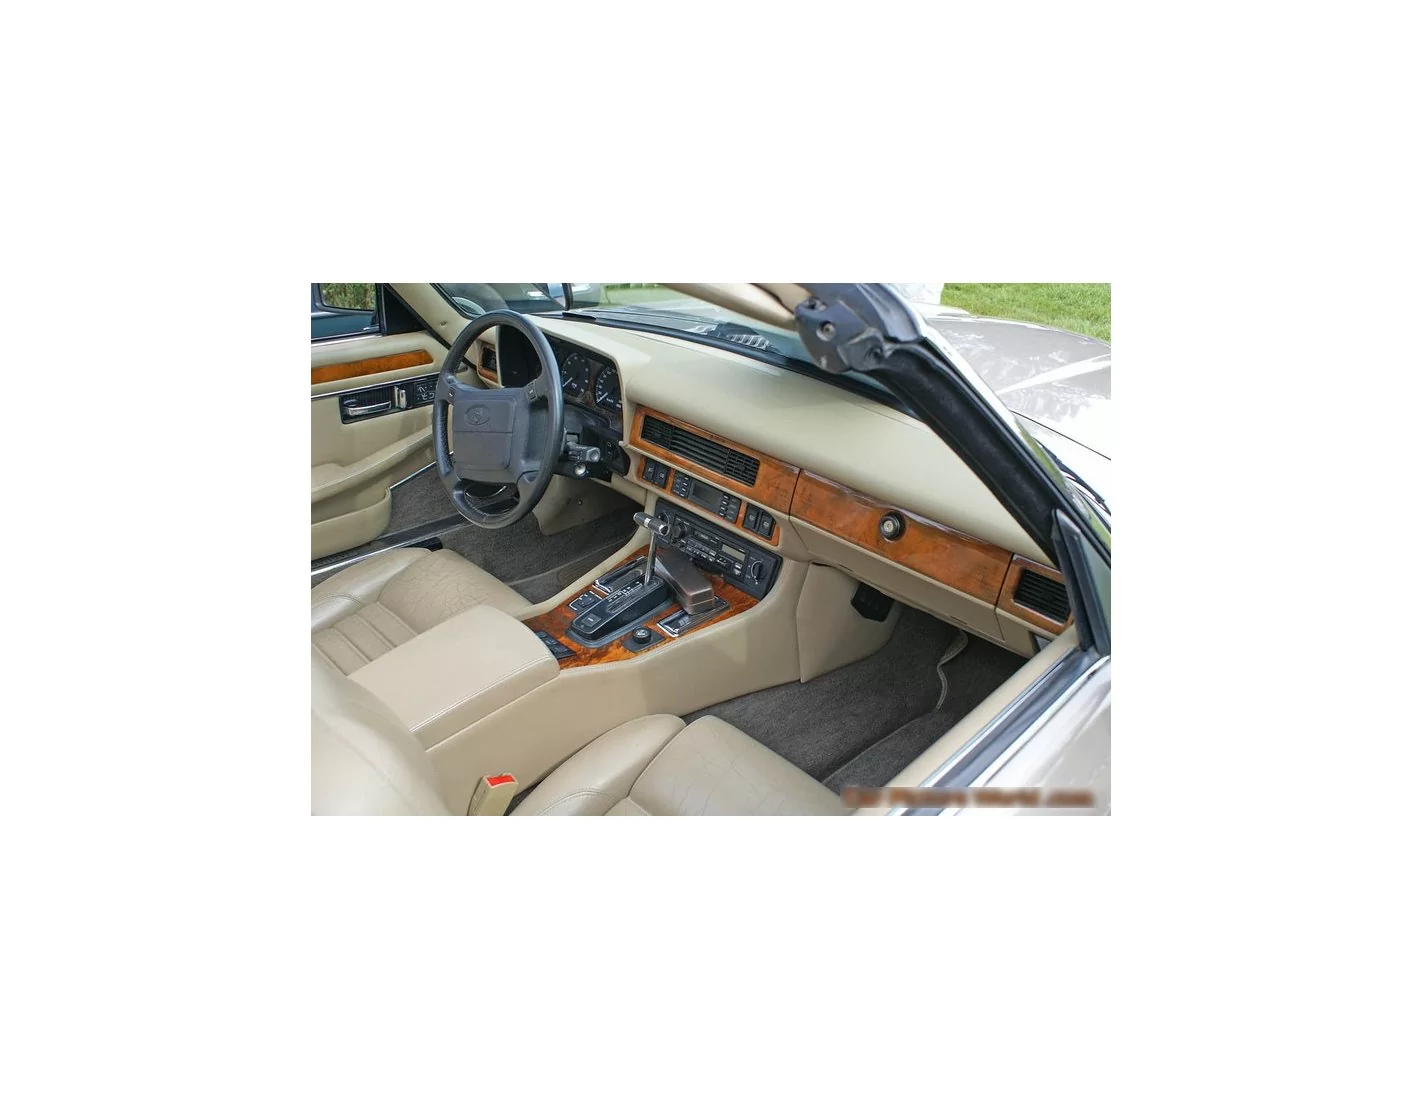 Jaguar XJS 1982-1992 Full Set, Automatic Gear, Shifter Type 1 Interior BD Dash Trim Kit